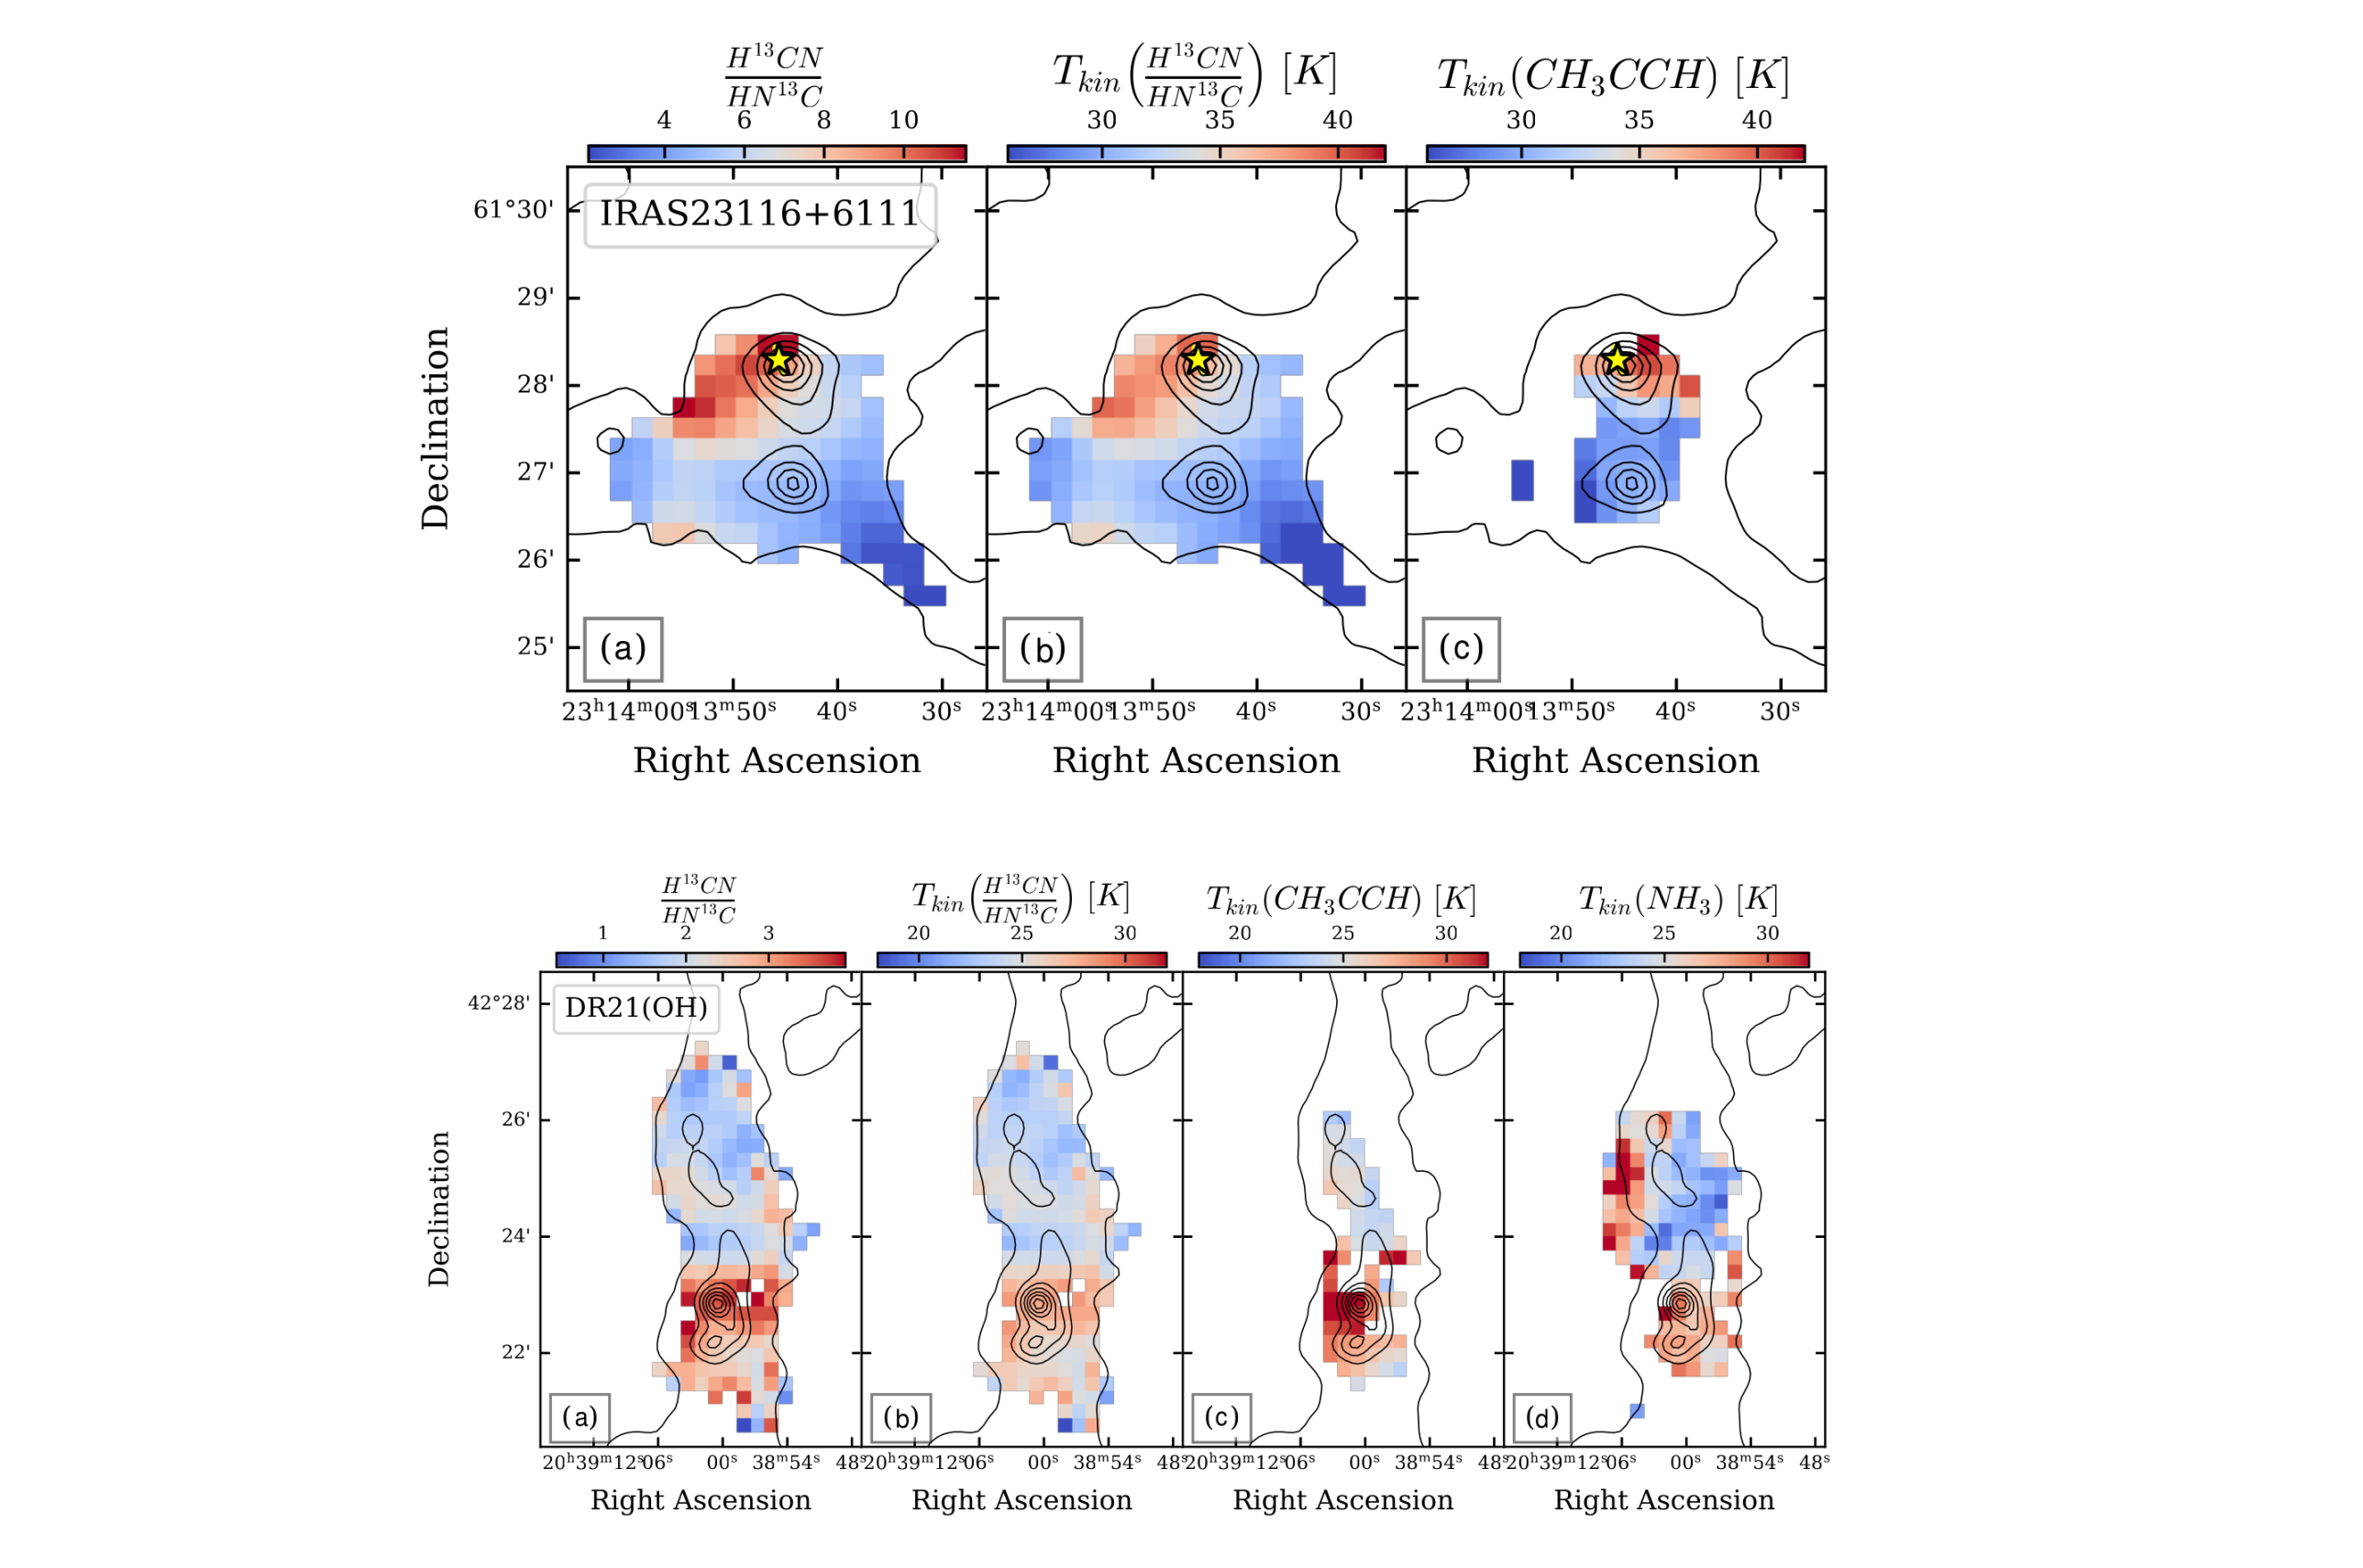 H13CN-HN13C Intensity Ratio As A Temperature Indicator Of Interstellar Clouds